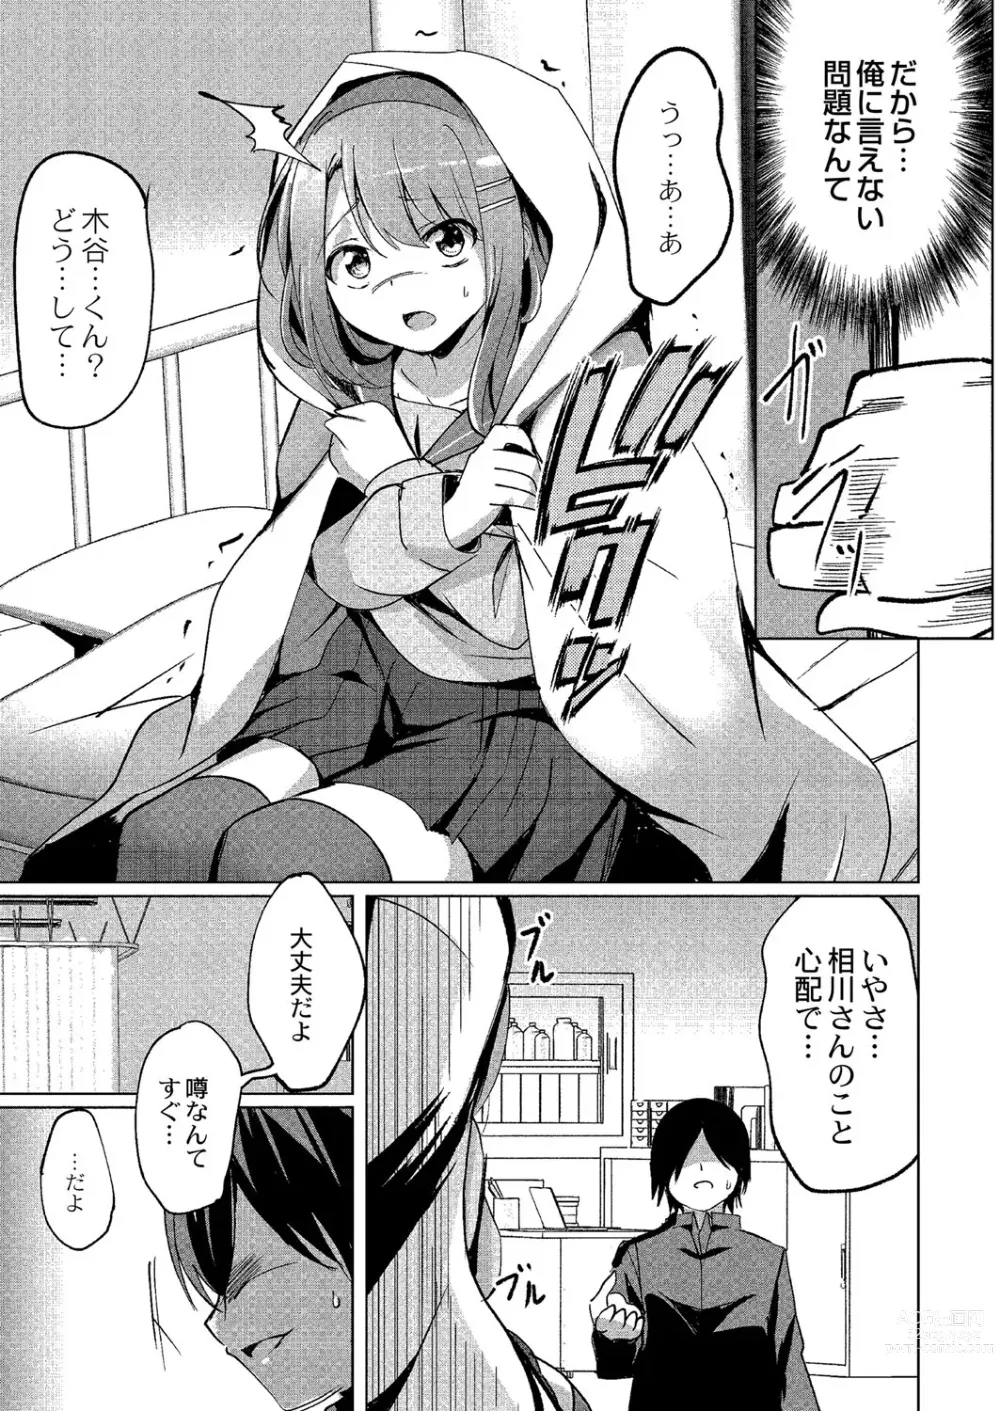 Page 8 of manga Wakarasare